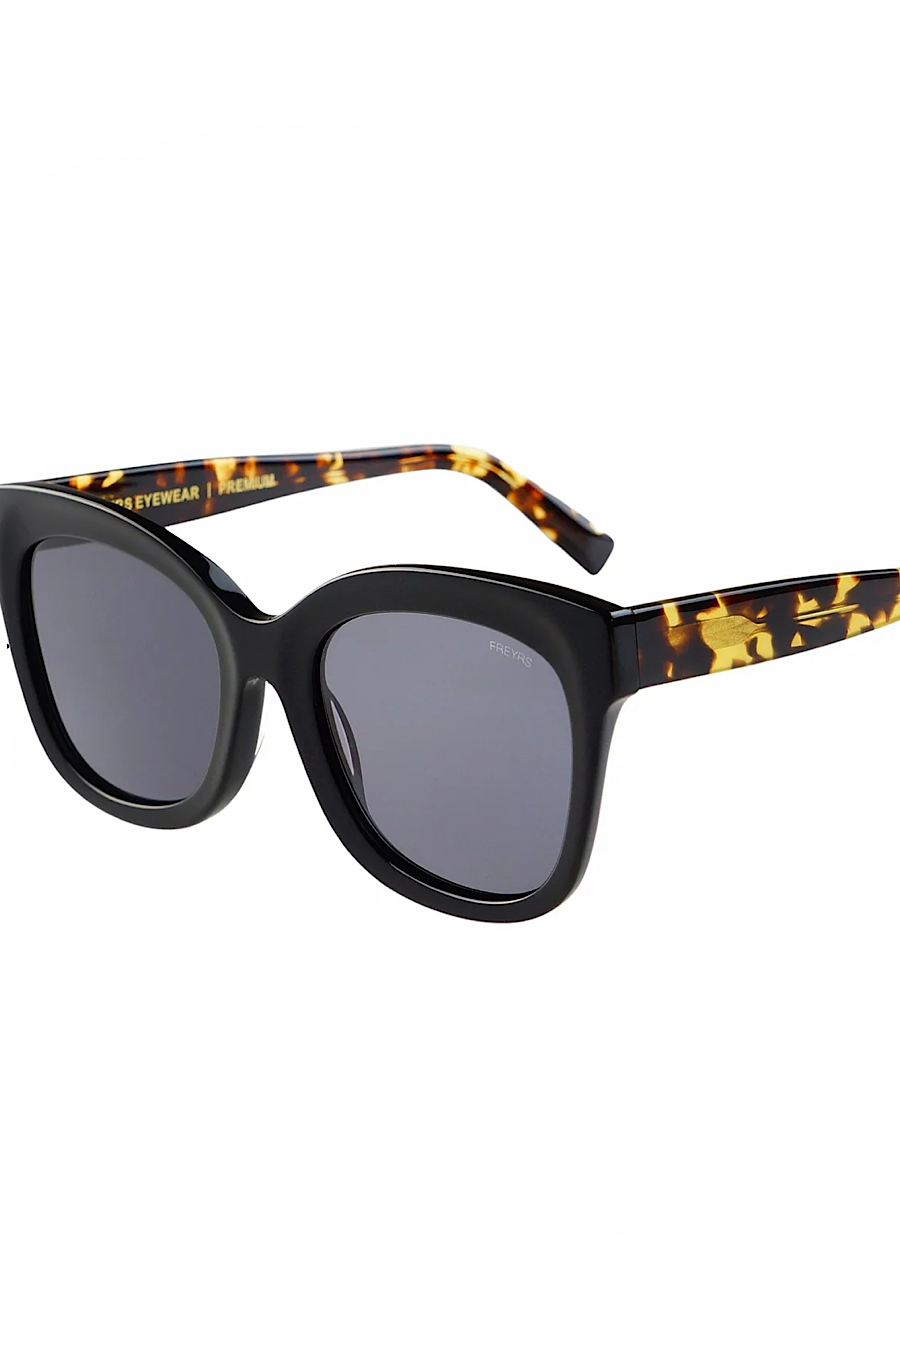 Freyrs Naples Sunglasses Black